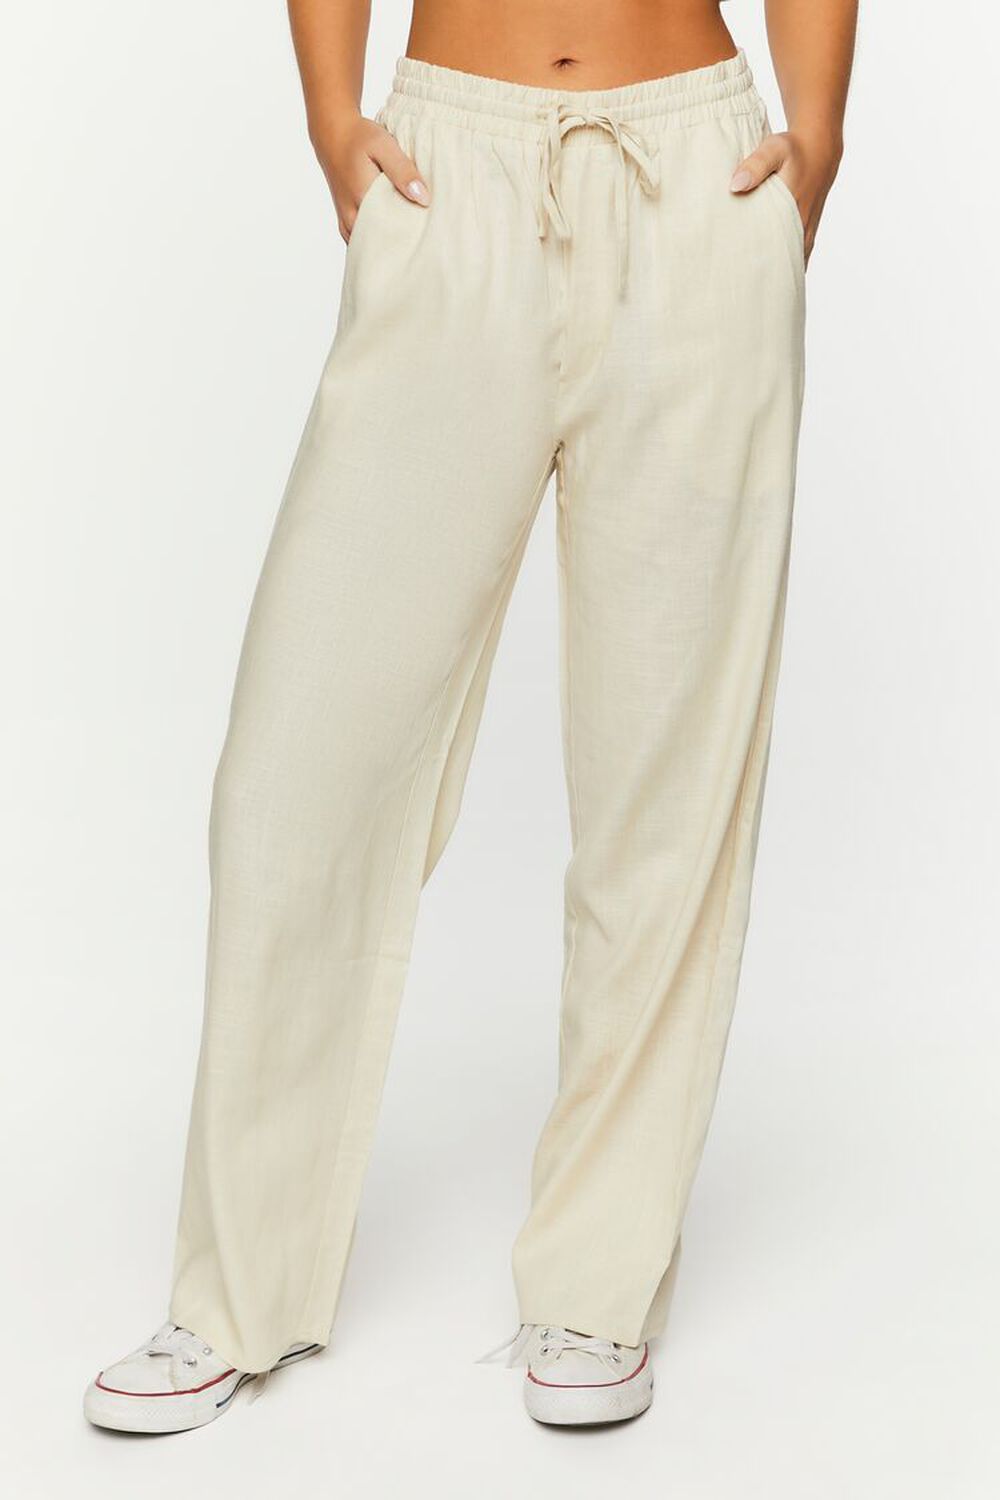 KHAKI Linen-Blend Mid-Rise Pants, image 2